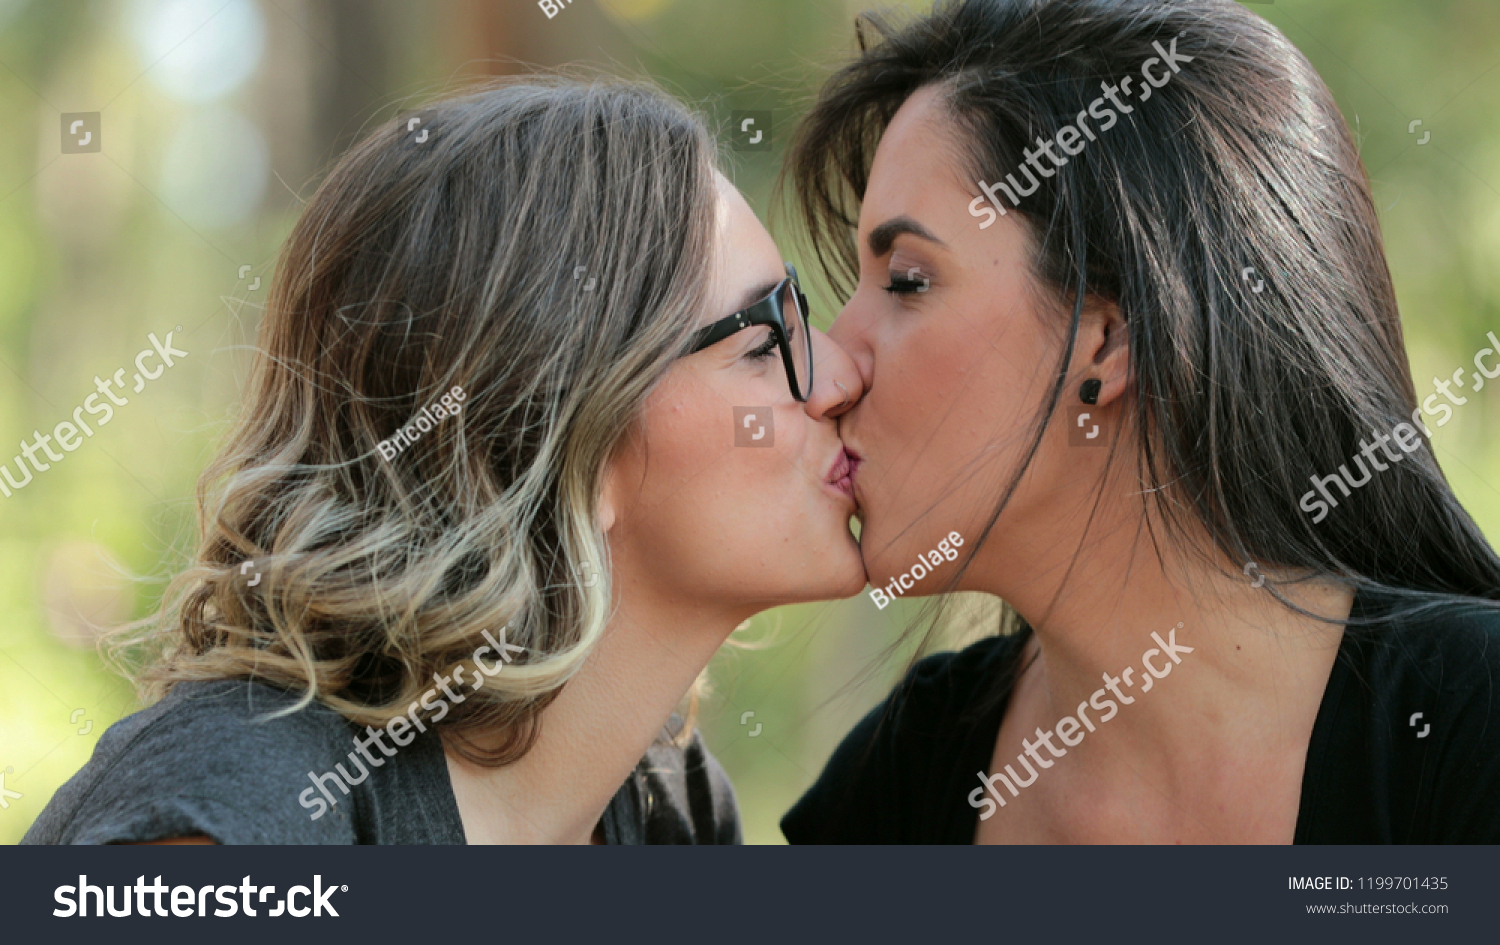 Lesbians Kiss Each Other